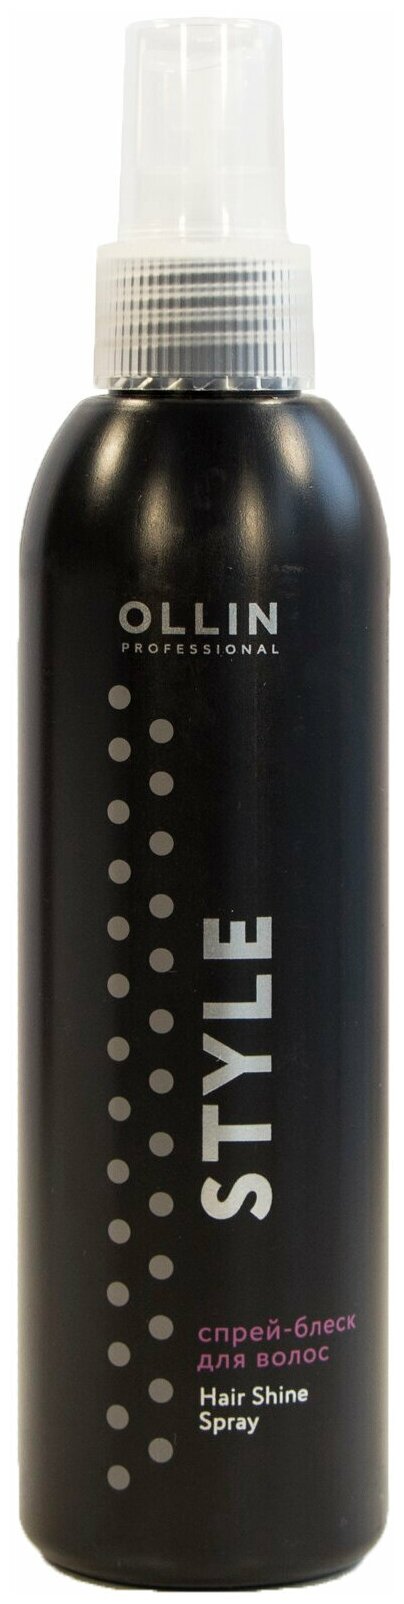 OLLIN Professional Спрей-блеск для волос, 220 г, 200 мл